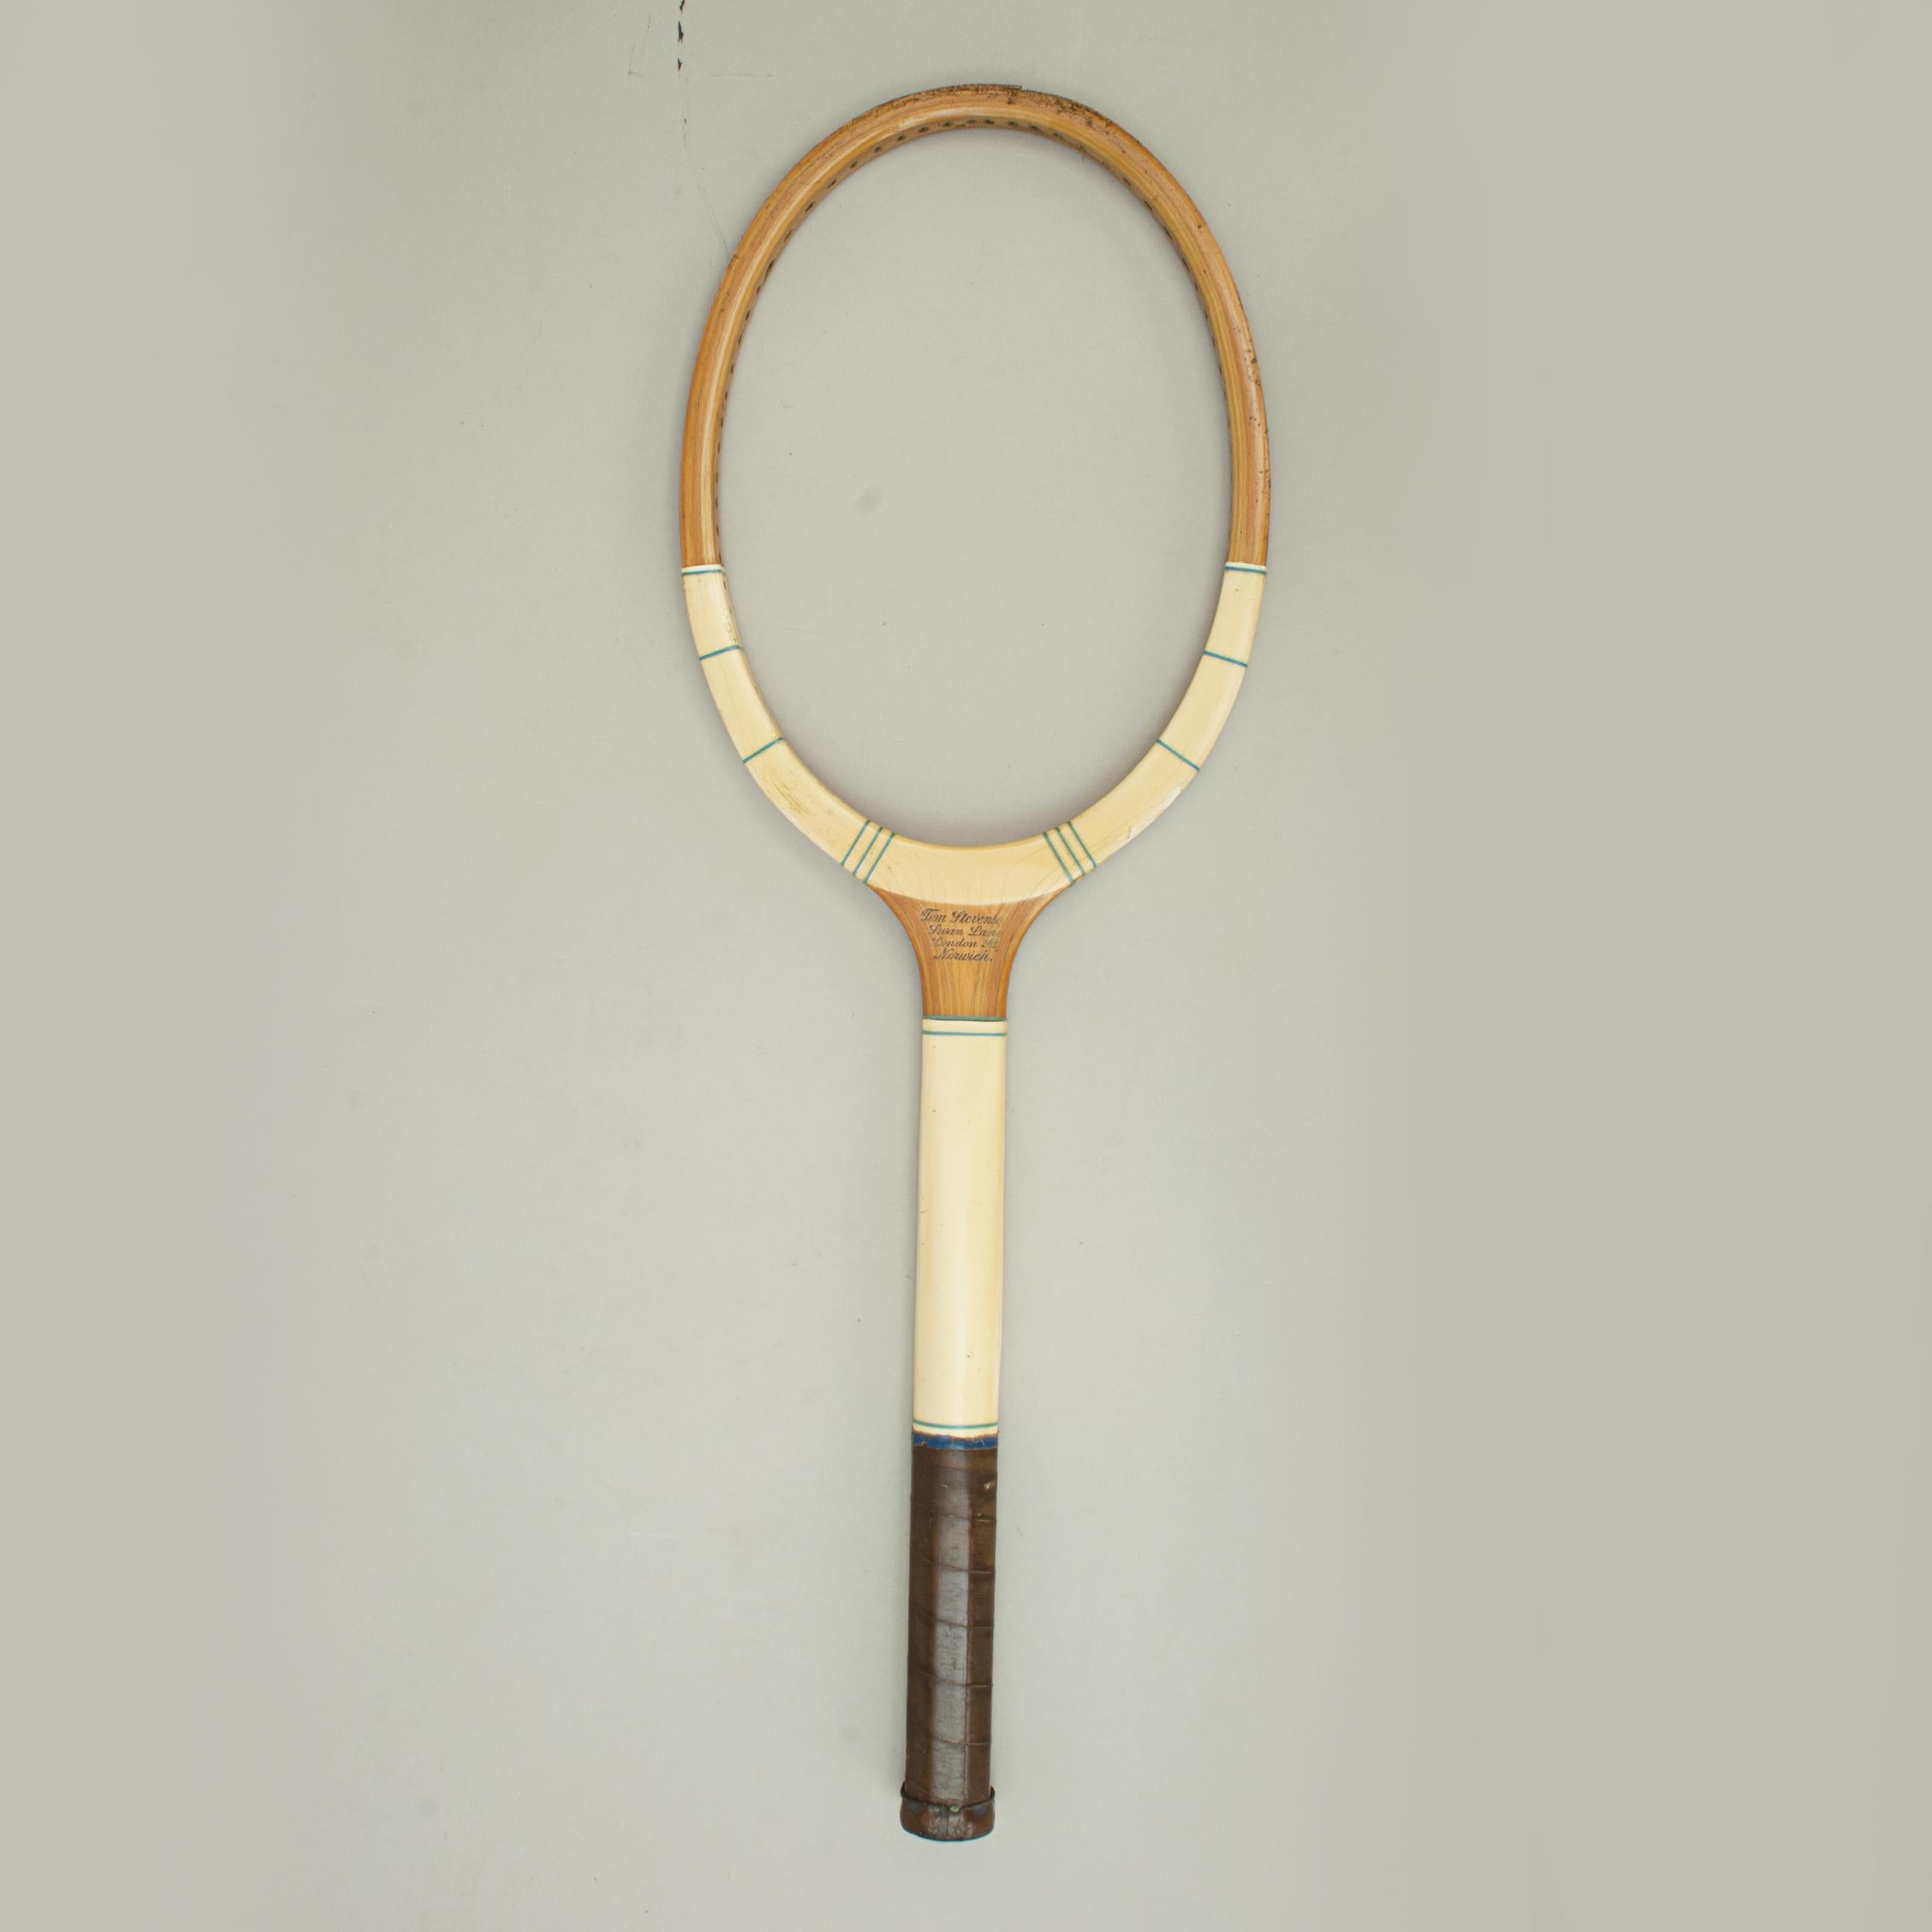 Vintage Lawn Tennis Racket, the Test by Stevenson 5